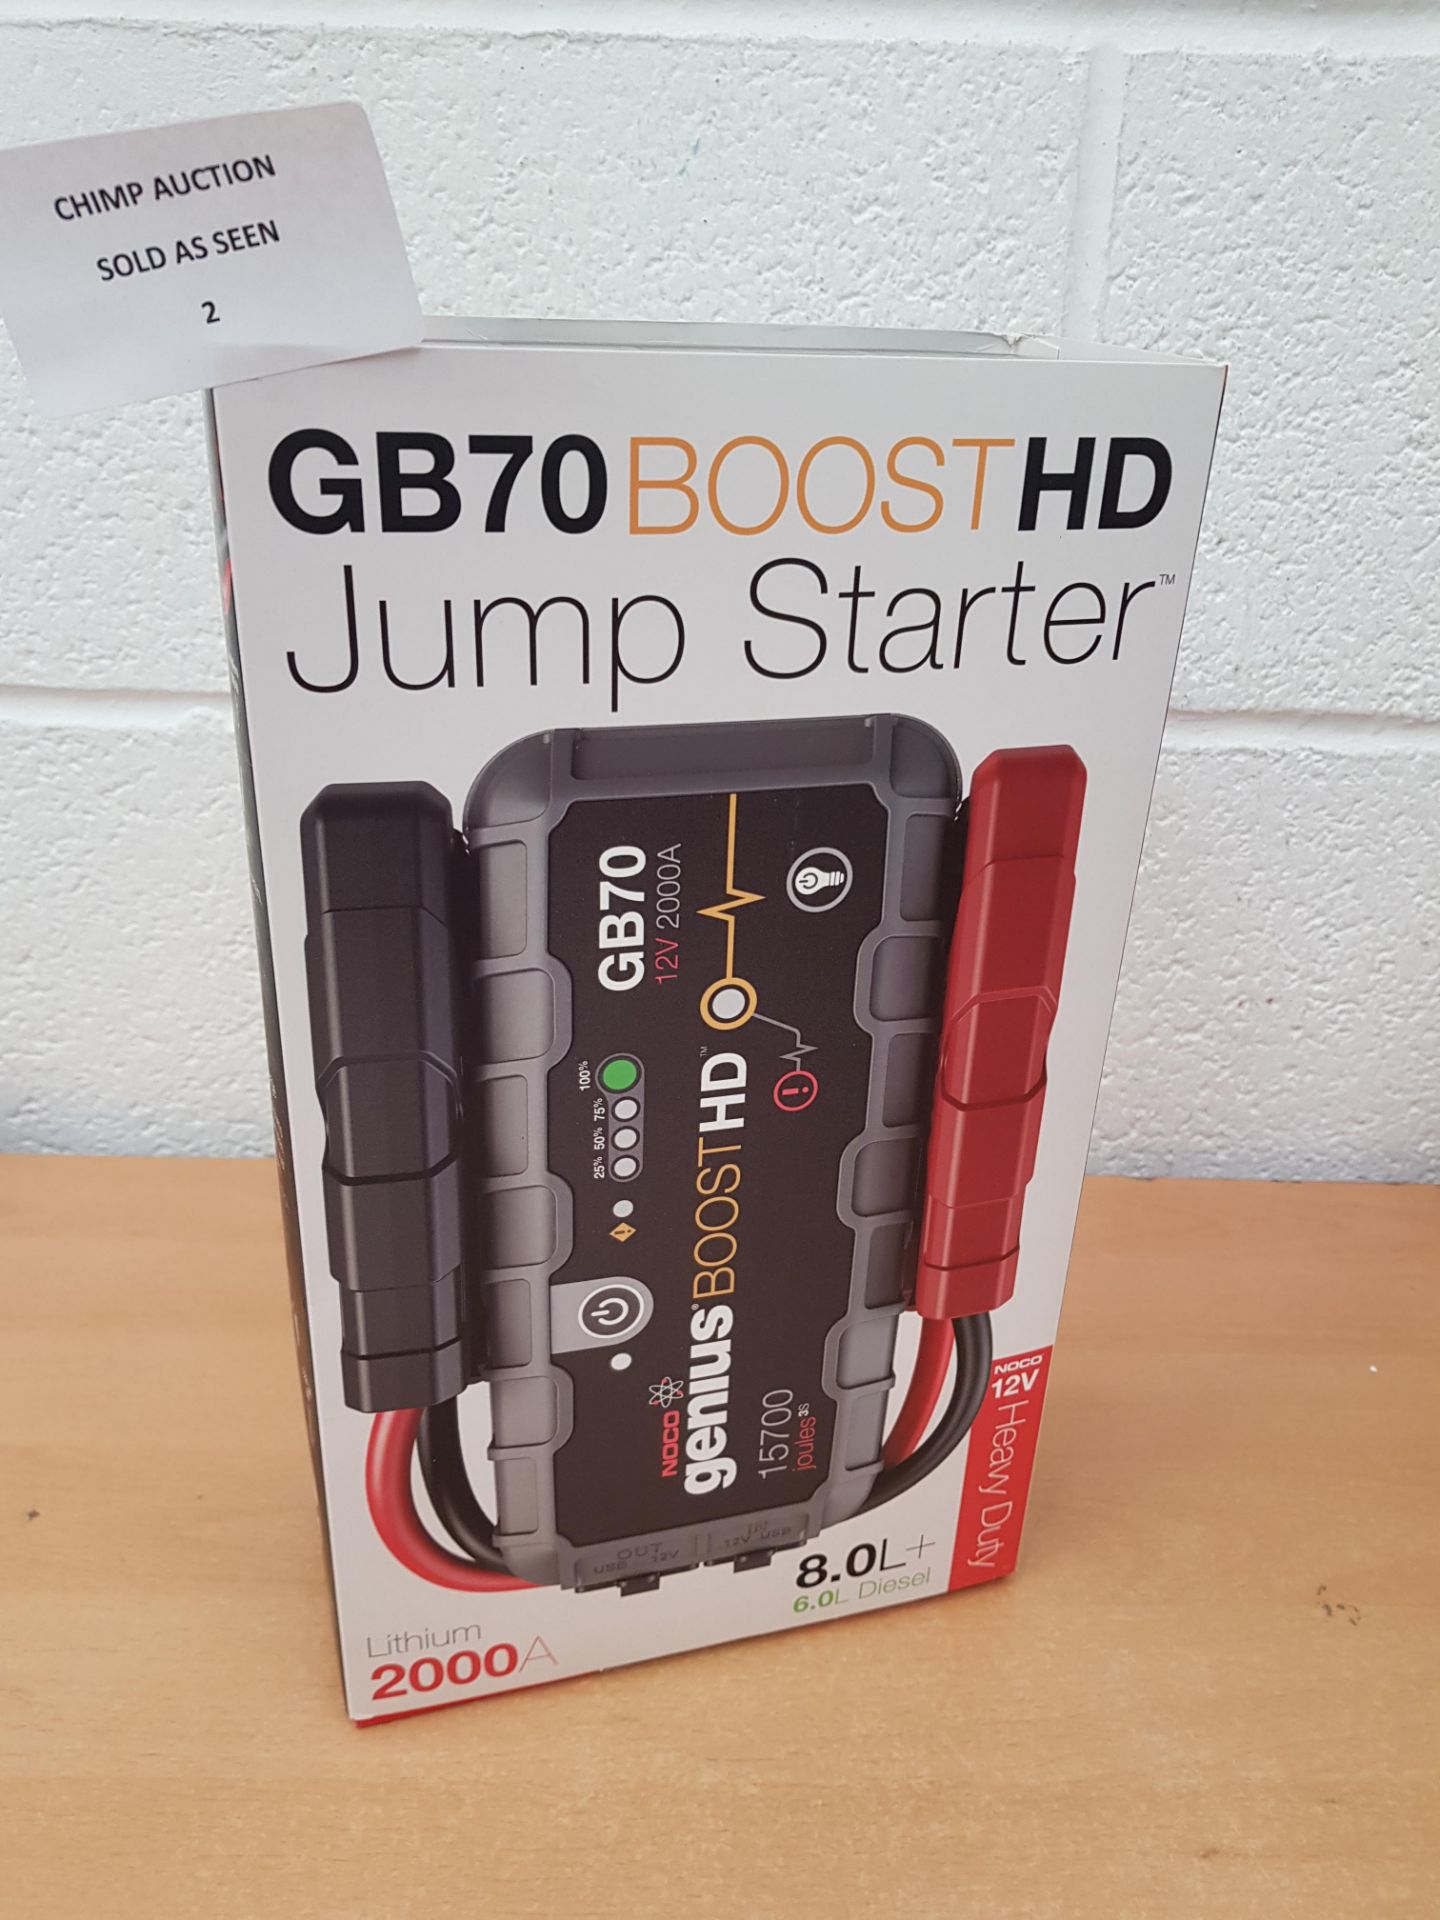 NOCO Boost HD GB70 2000 Amp 12V UltraSafe Jump Starter RRP £199.99.